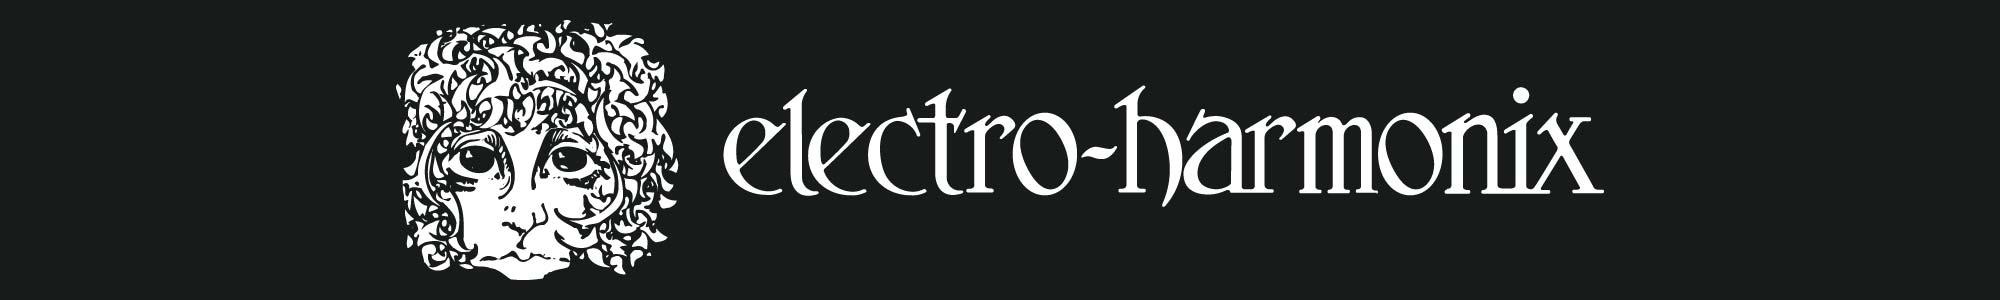 Electro Harmonix Logo Header